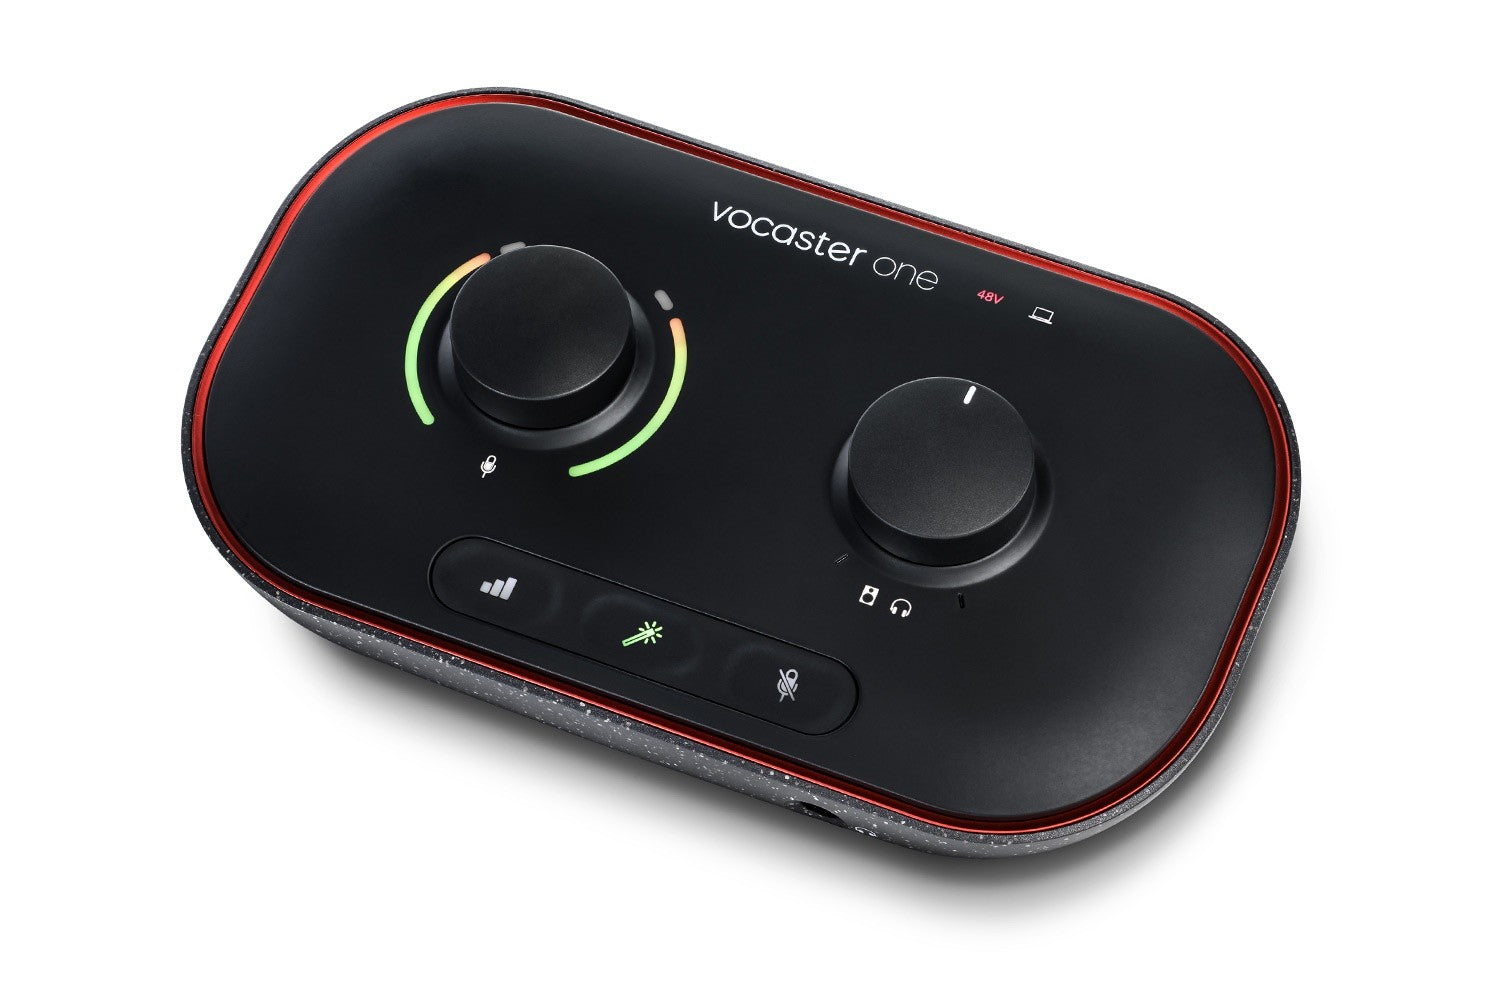 Focusrite Vocaster One | Podcasting Audio Interface